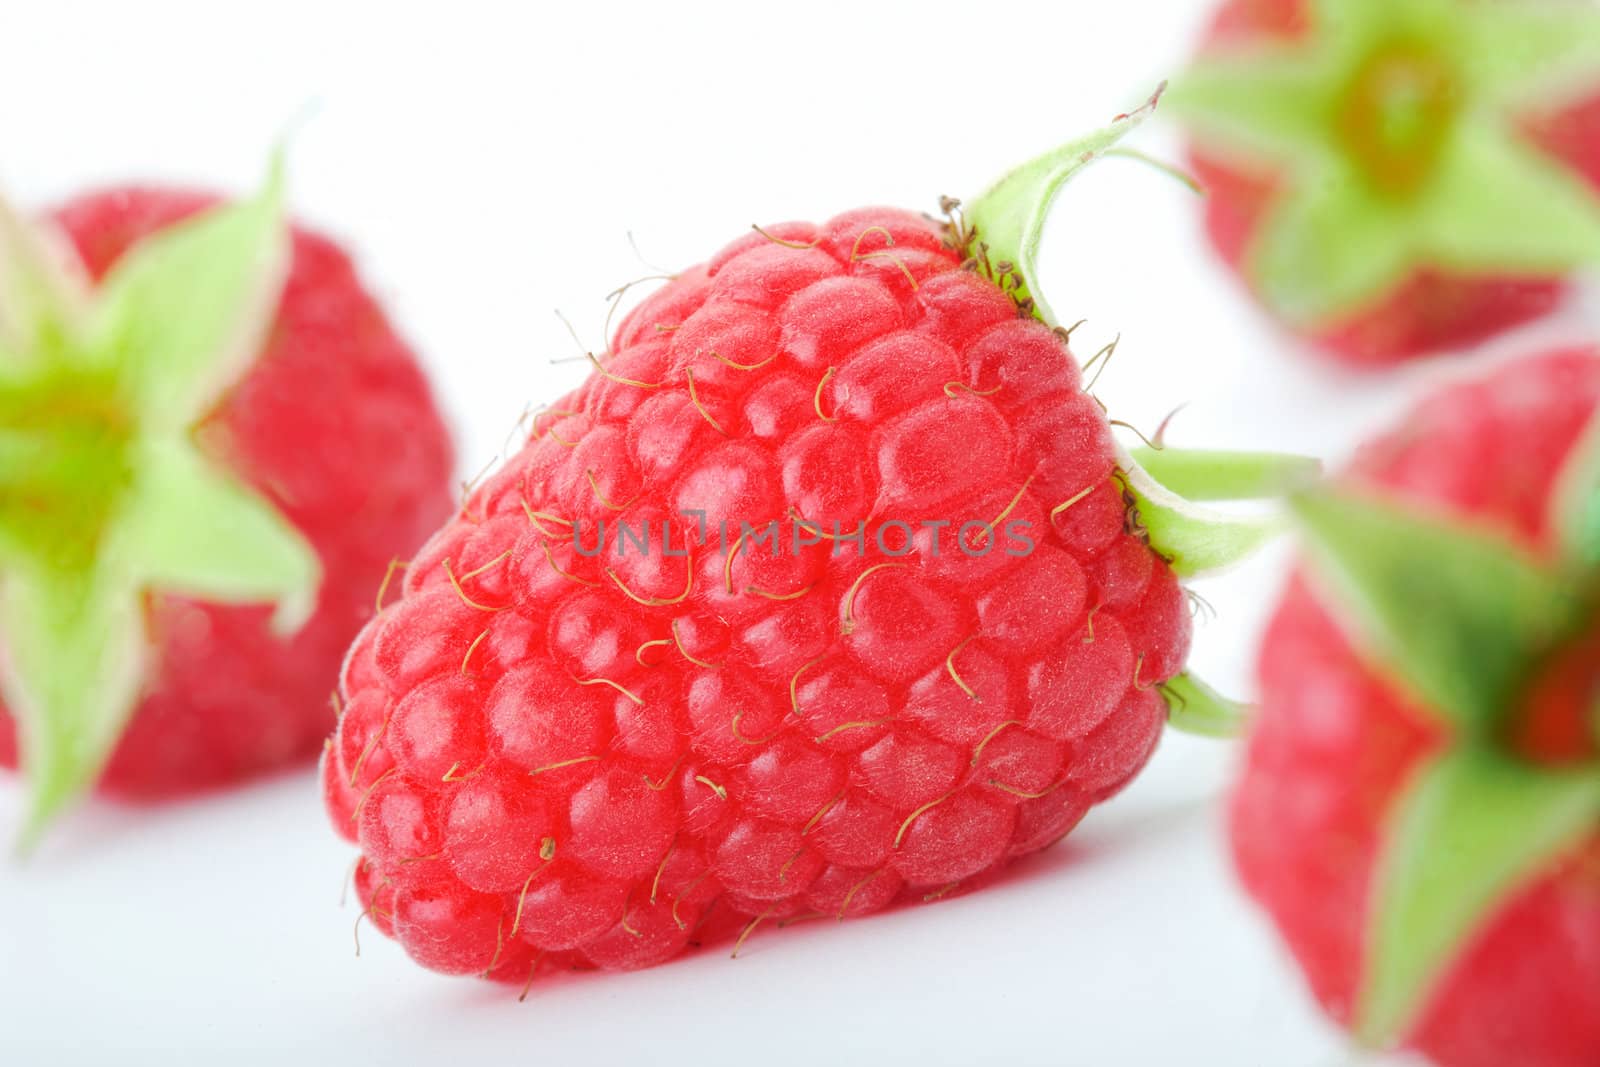 Raspberries by romanshyshak